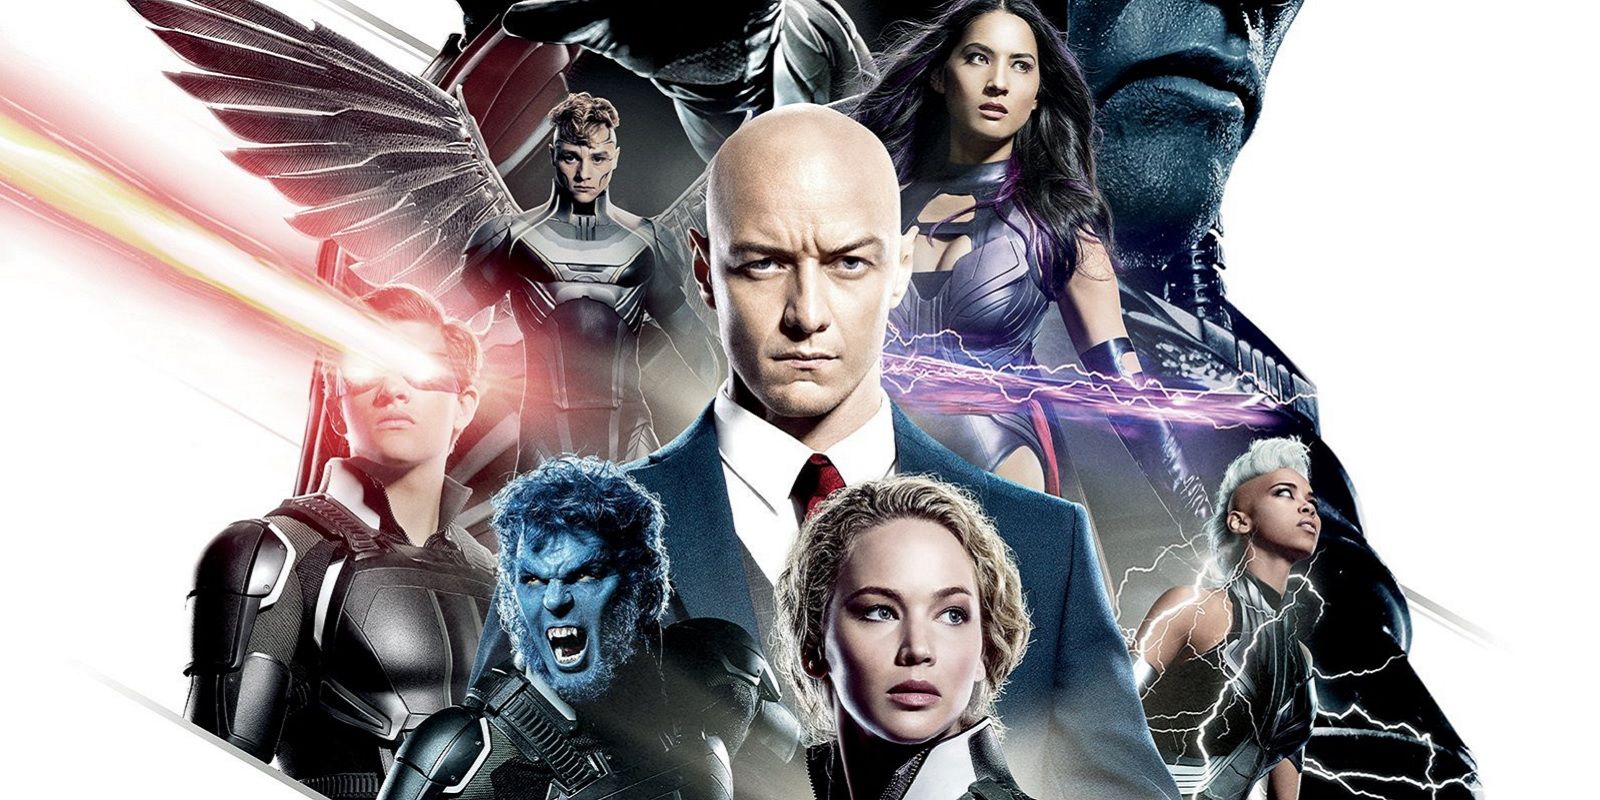 X-Men Apocalypse - Full cast poster